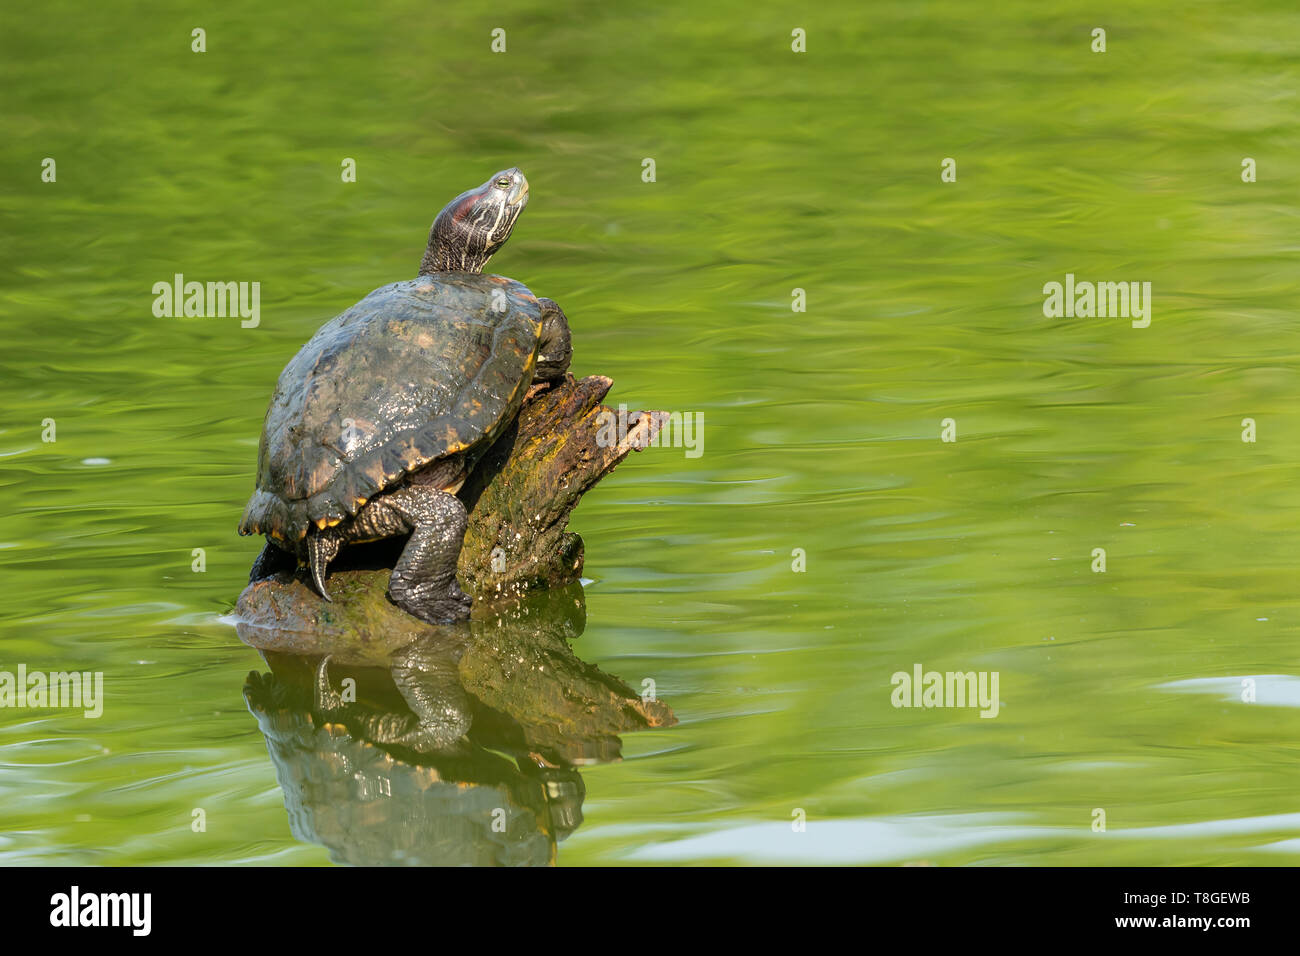 Pond slider turtle resting on tree stump in a pond Stock Photo